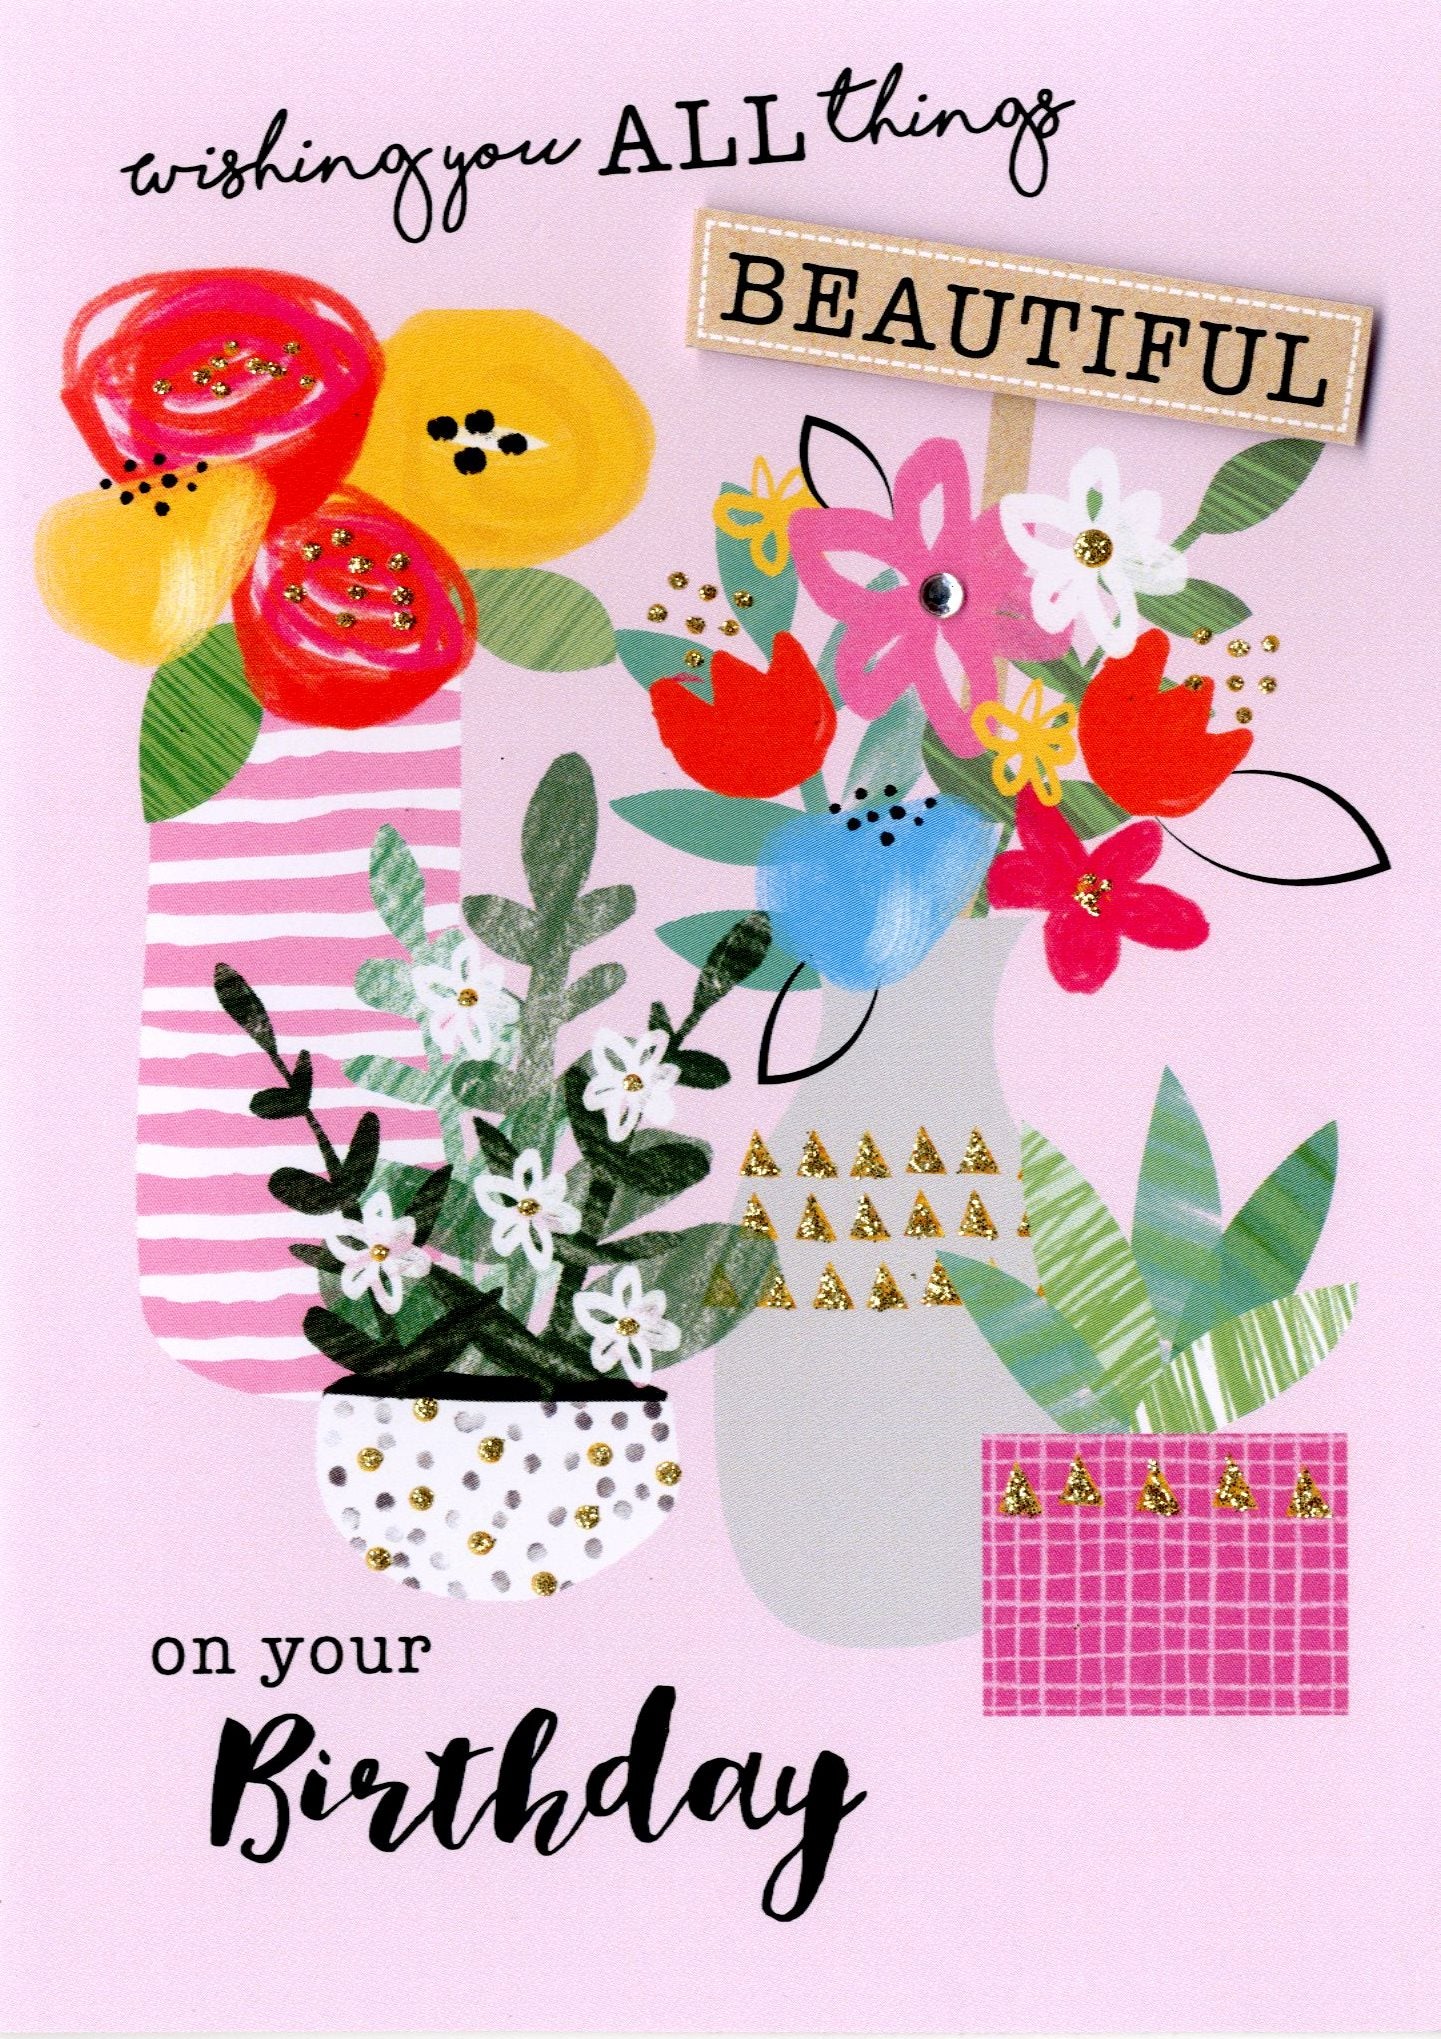 All Things Beautiful Birthday Greeting Card